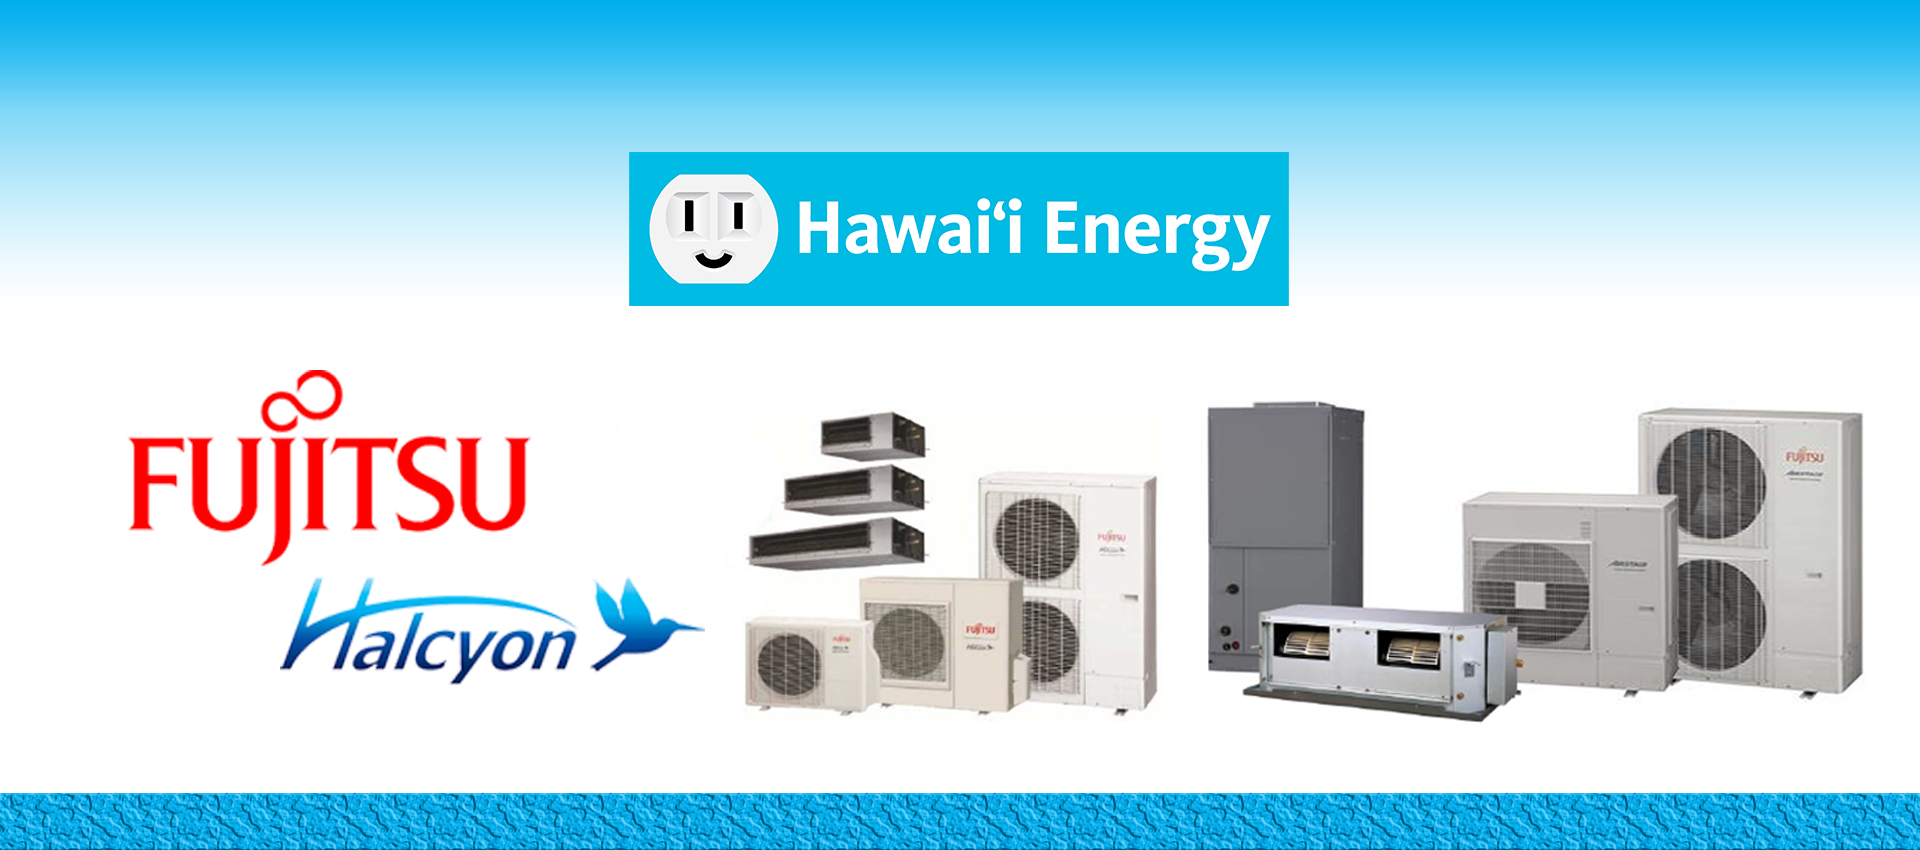 pacific-energy-strategies-llc-hawaii-energy-rebate-doubles-for-hot